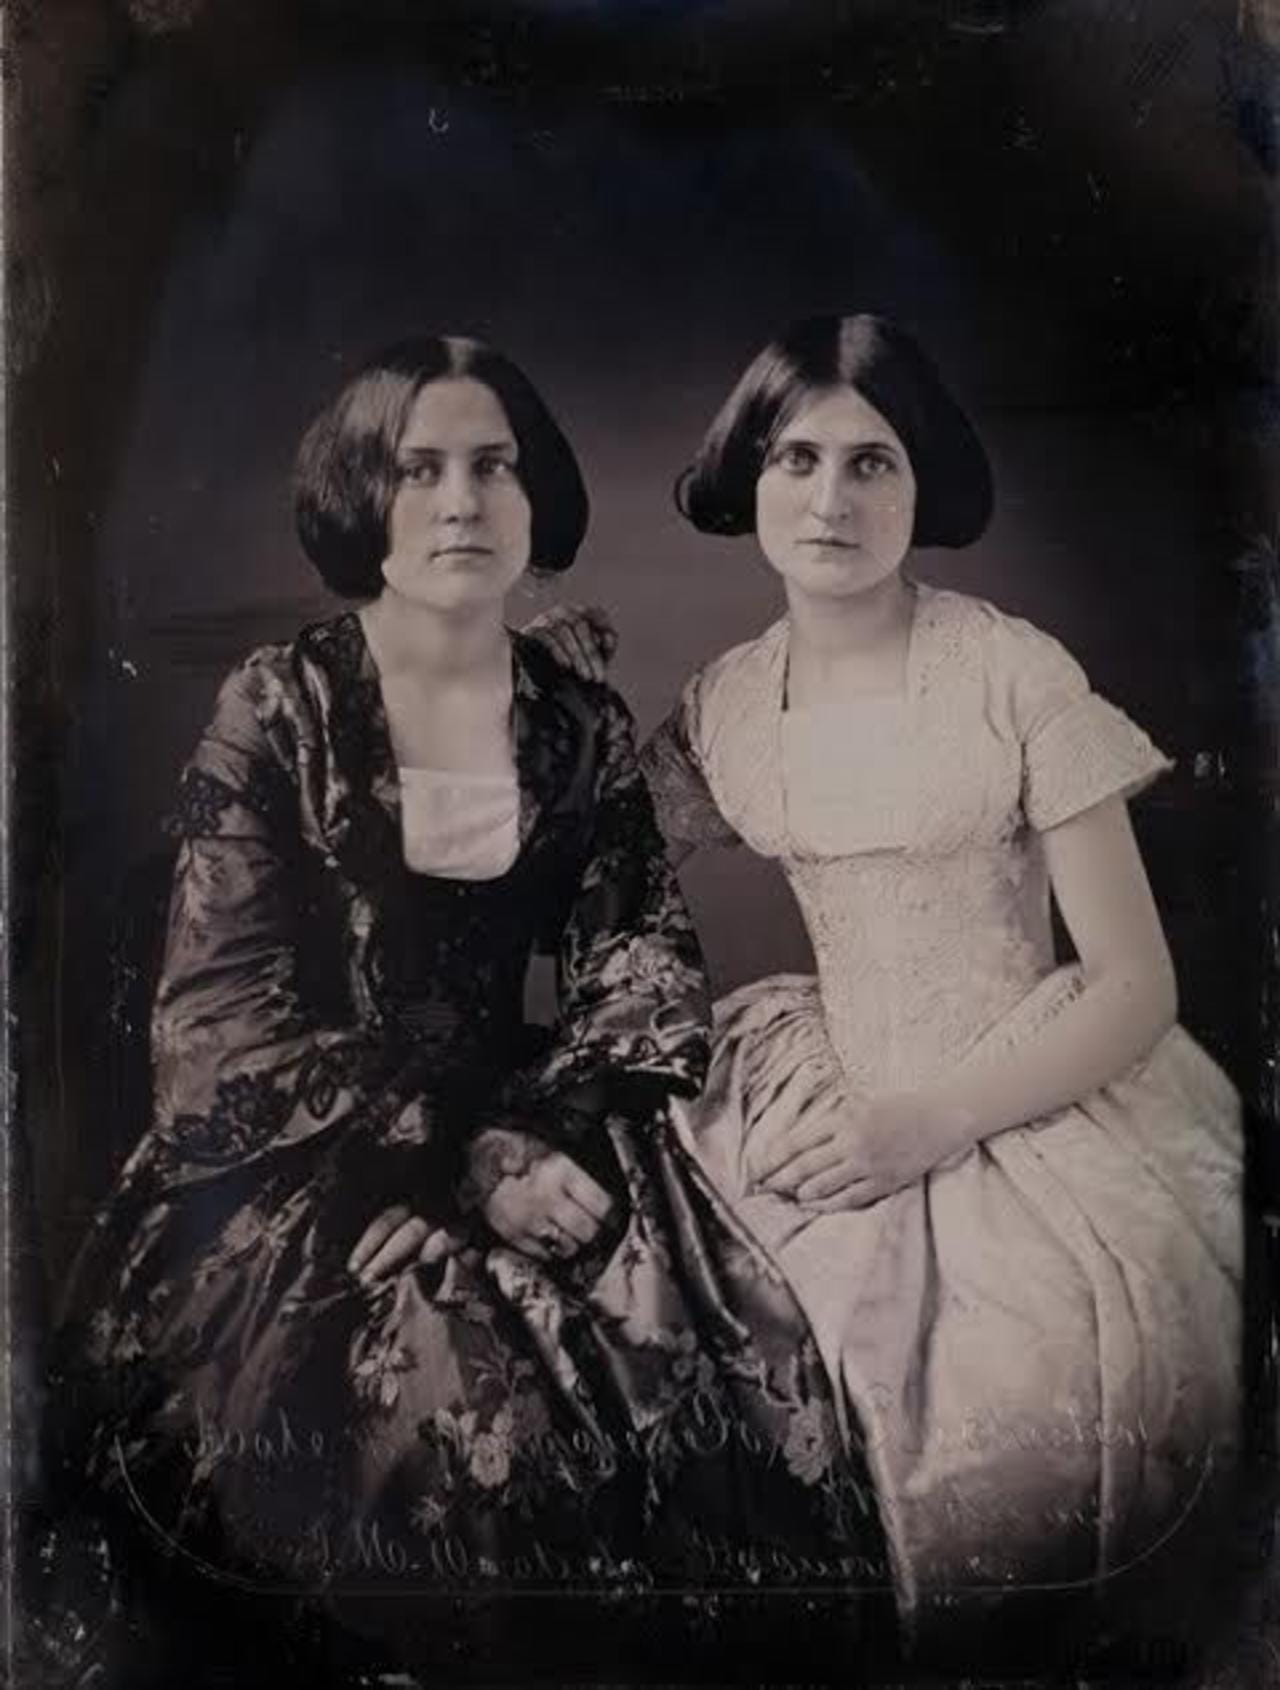 The Sisters Who Spoke to Spirits - by Ada Calhoun